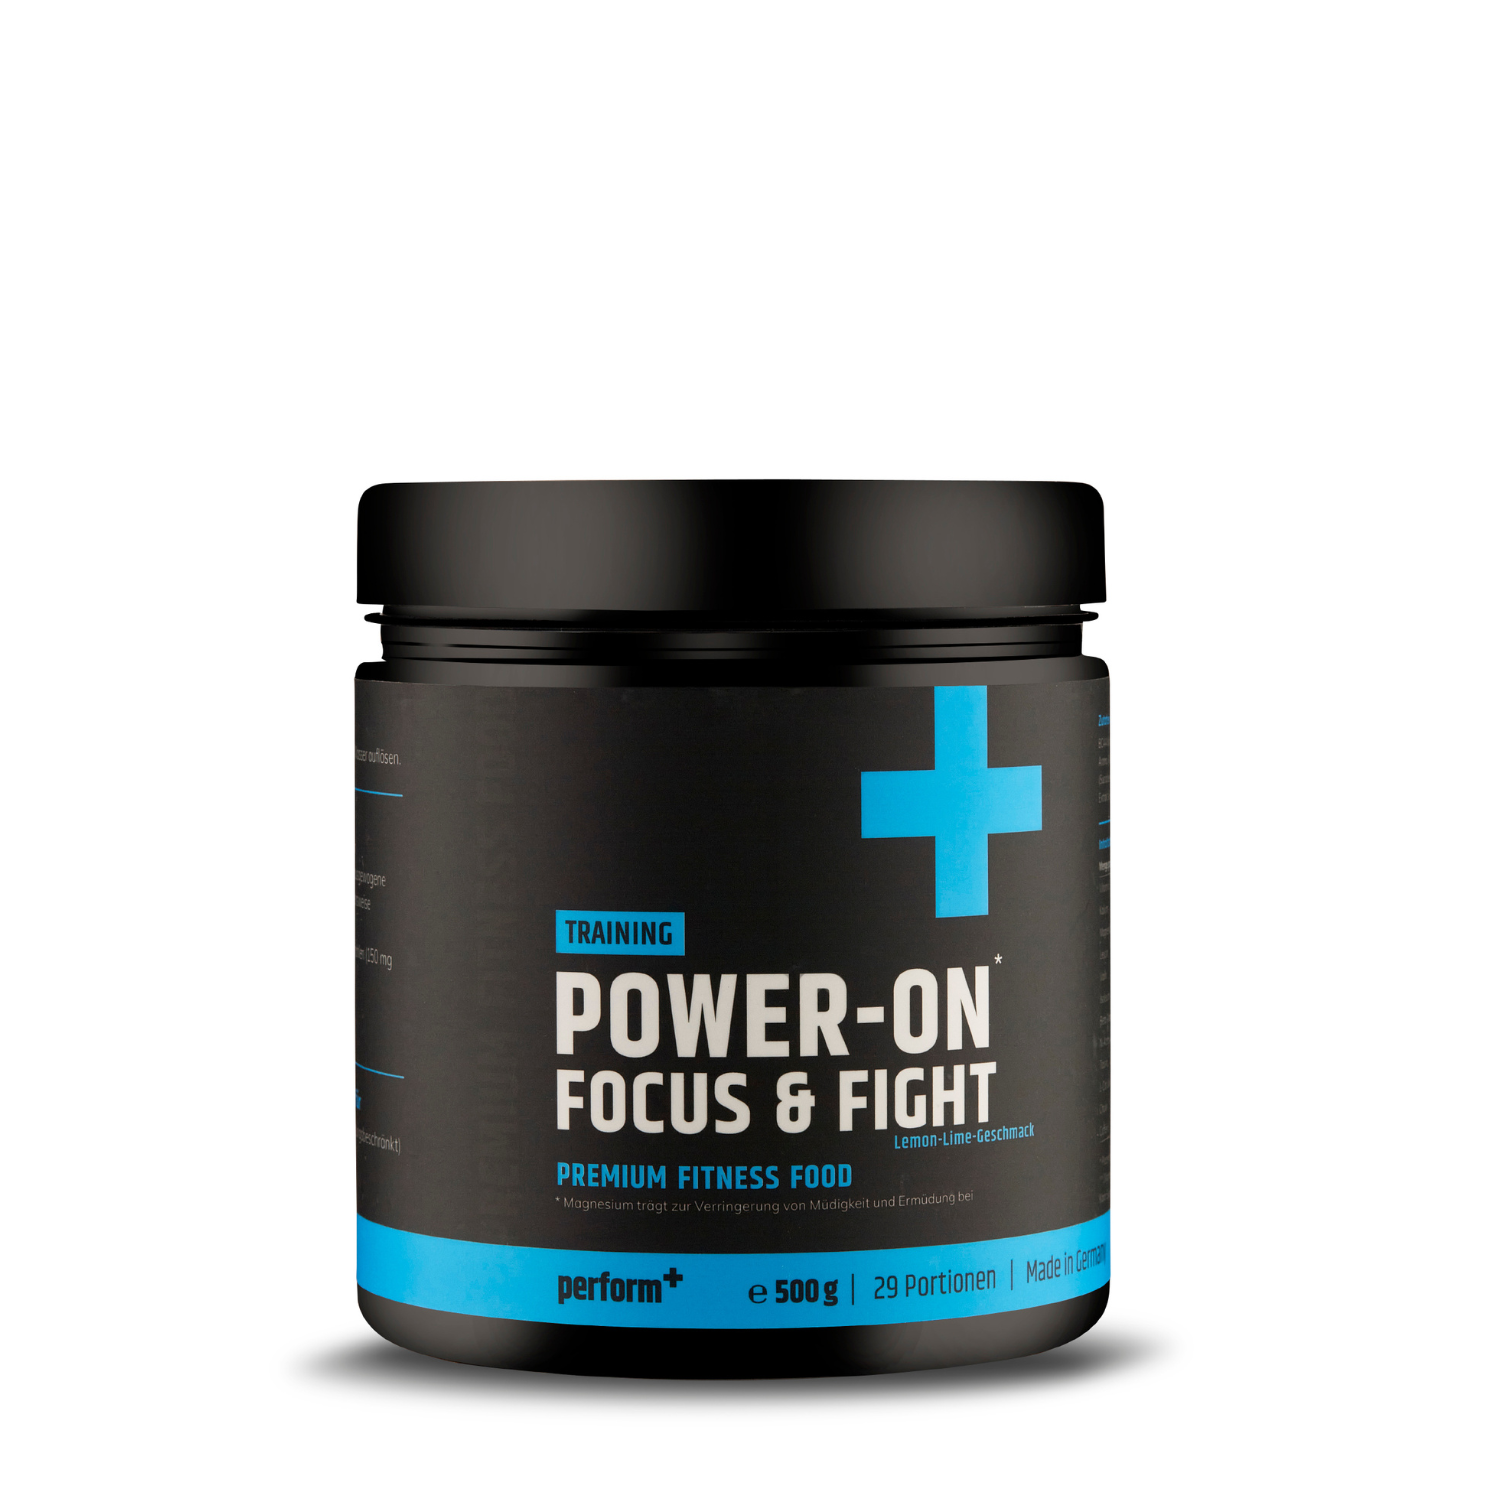 Power-On Focus & Fight